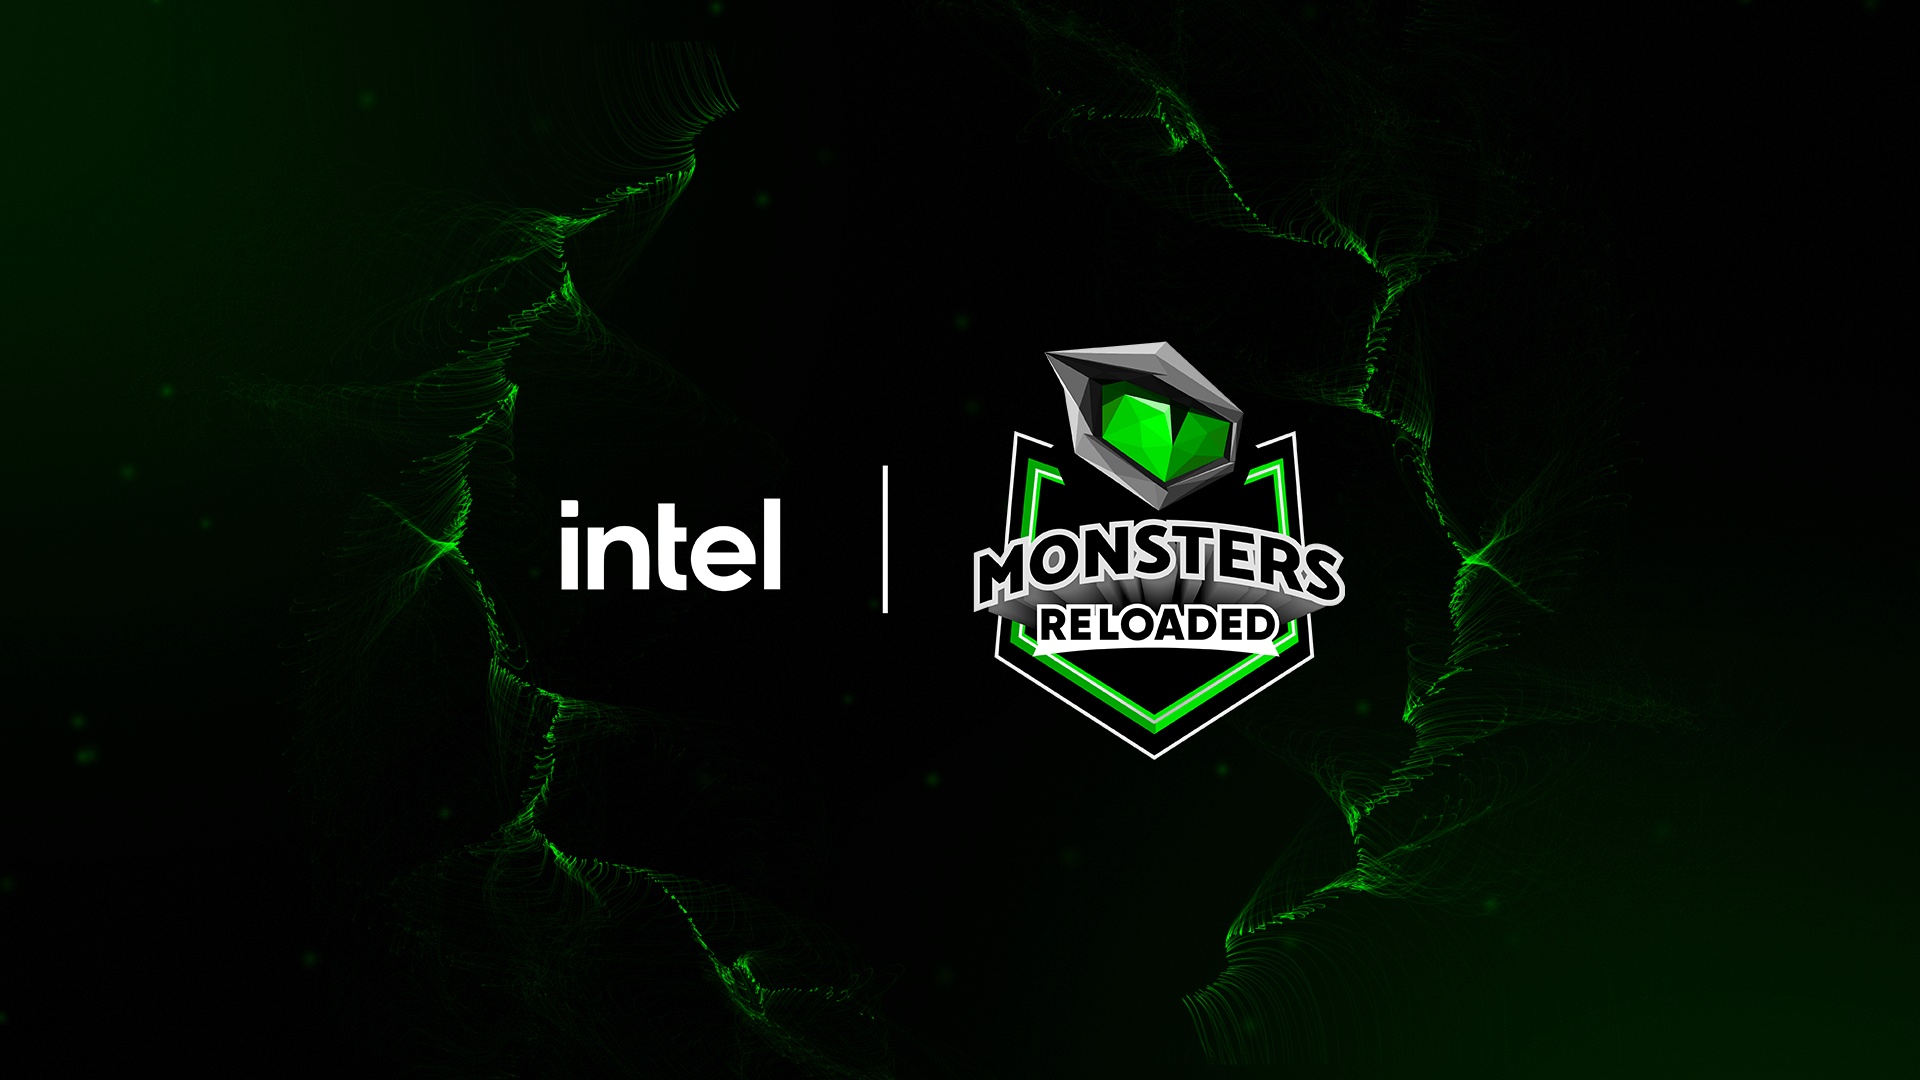 Intel Monsters Reloaded